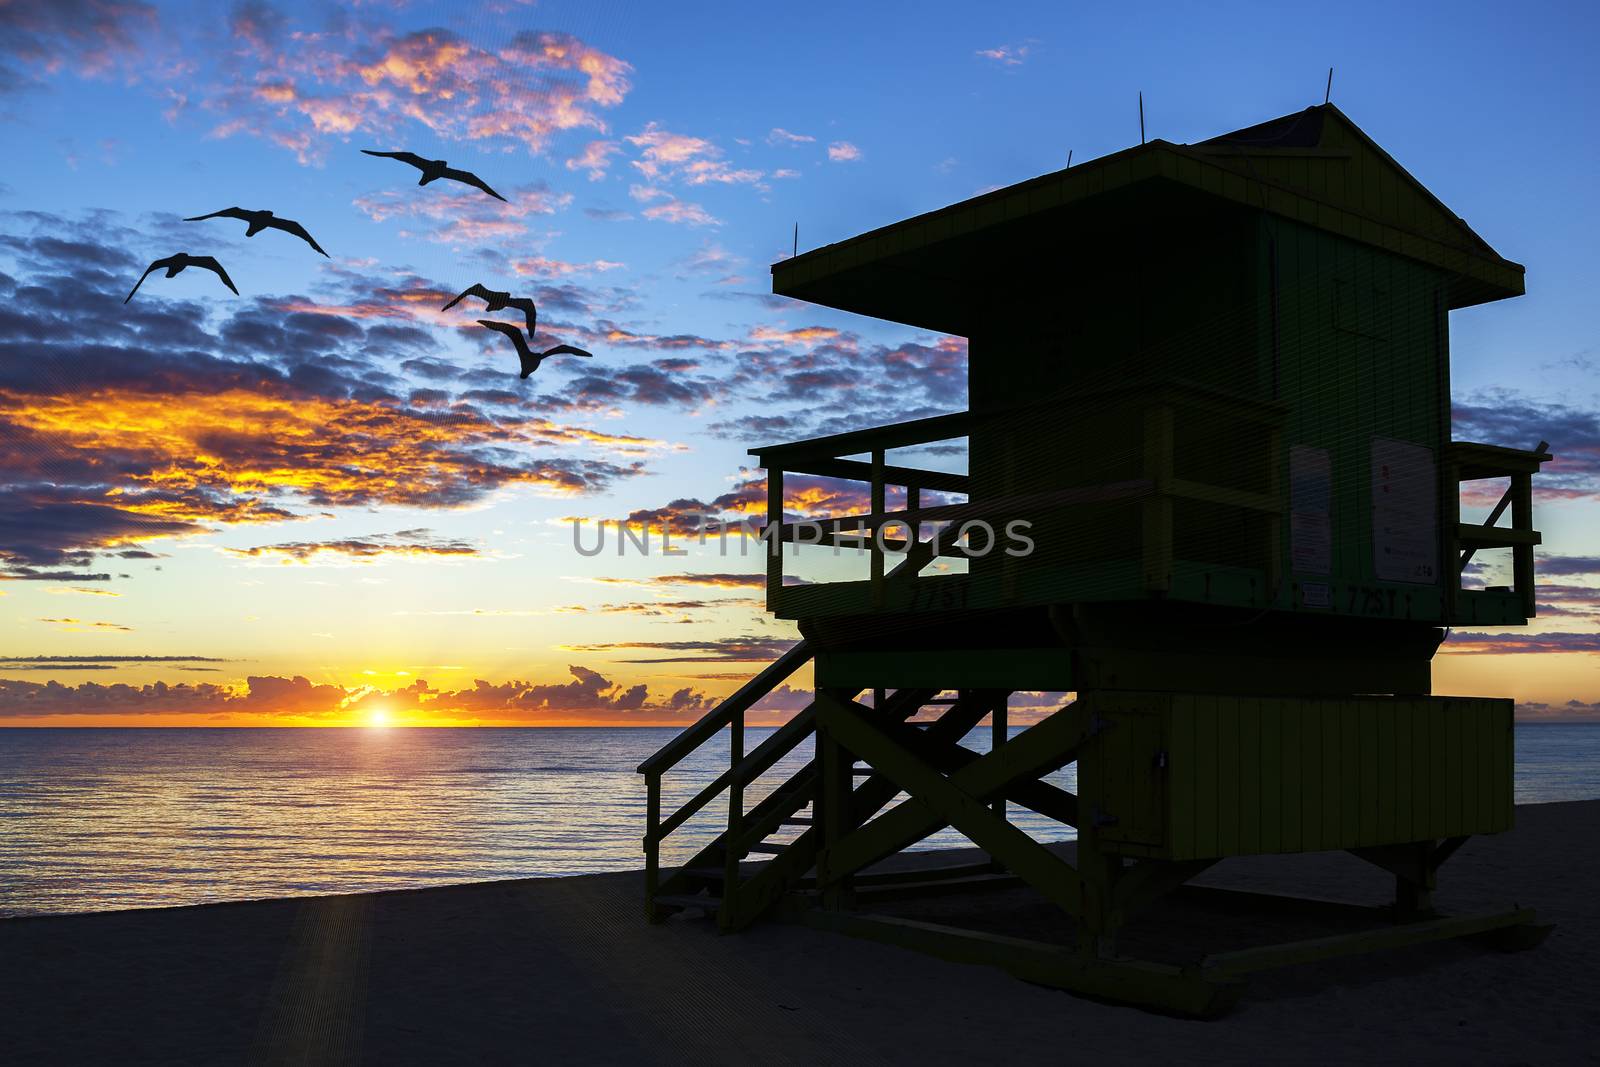 Miami South Beach and lifeguard tower at sunrise, USA